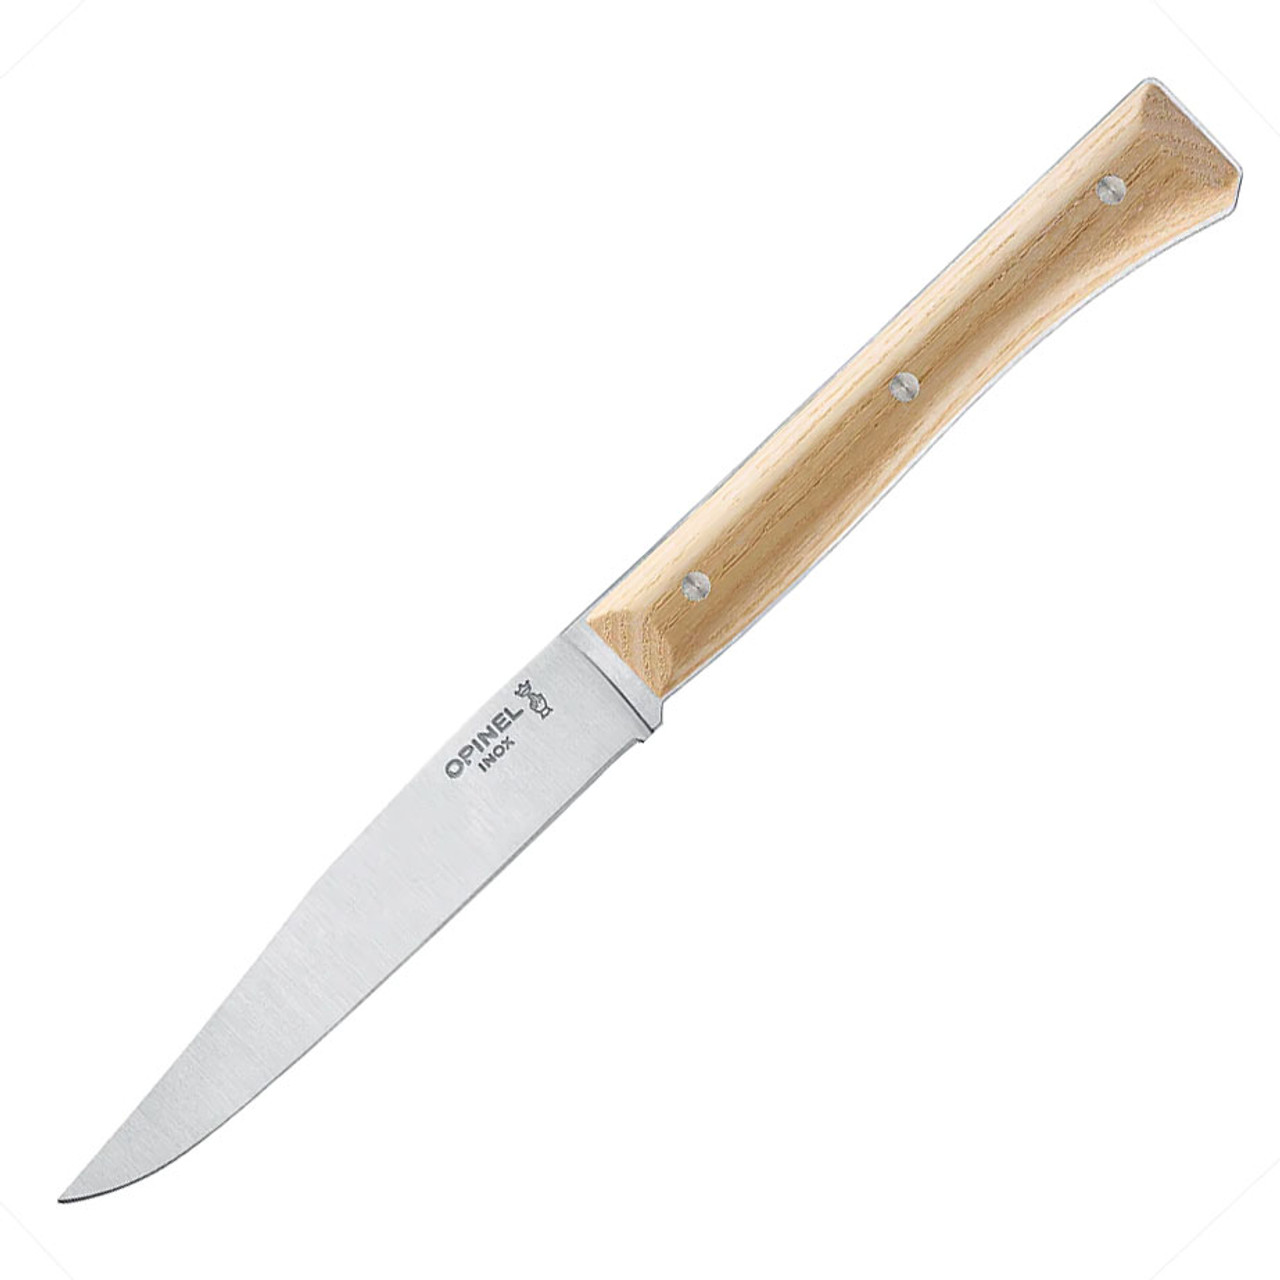 Opinel Facette Steak Knives (Set of 4) - 4.3" Smooth Stainless Steel Plain Blades, Ash Wood Handles (OP002496)